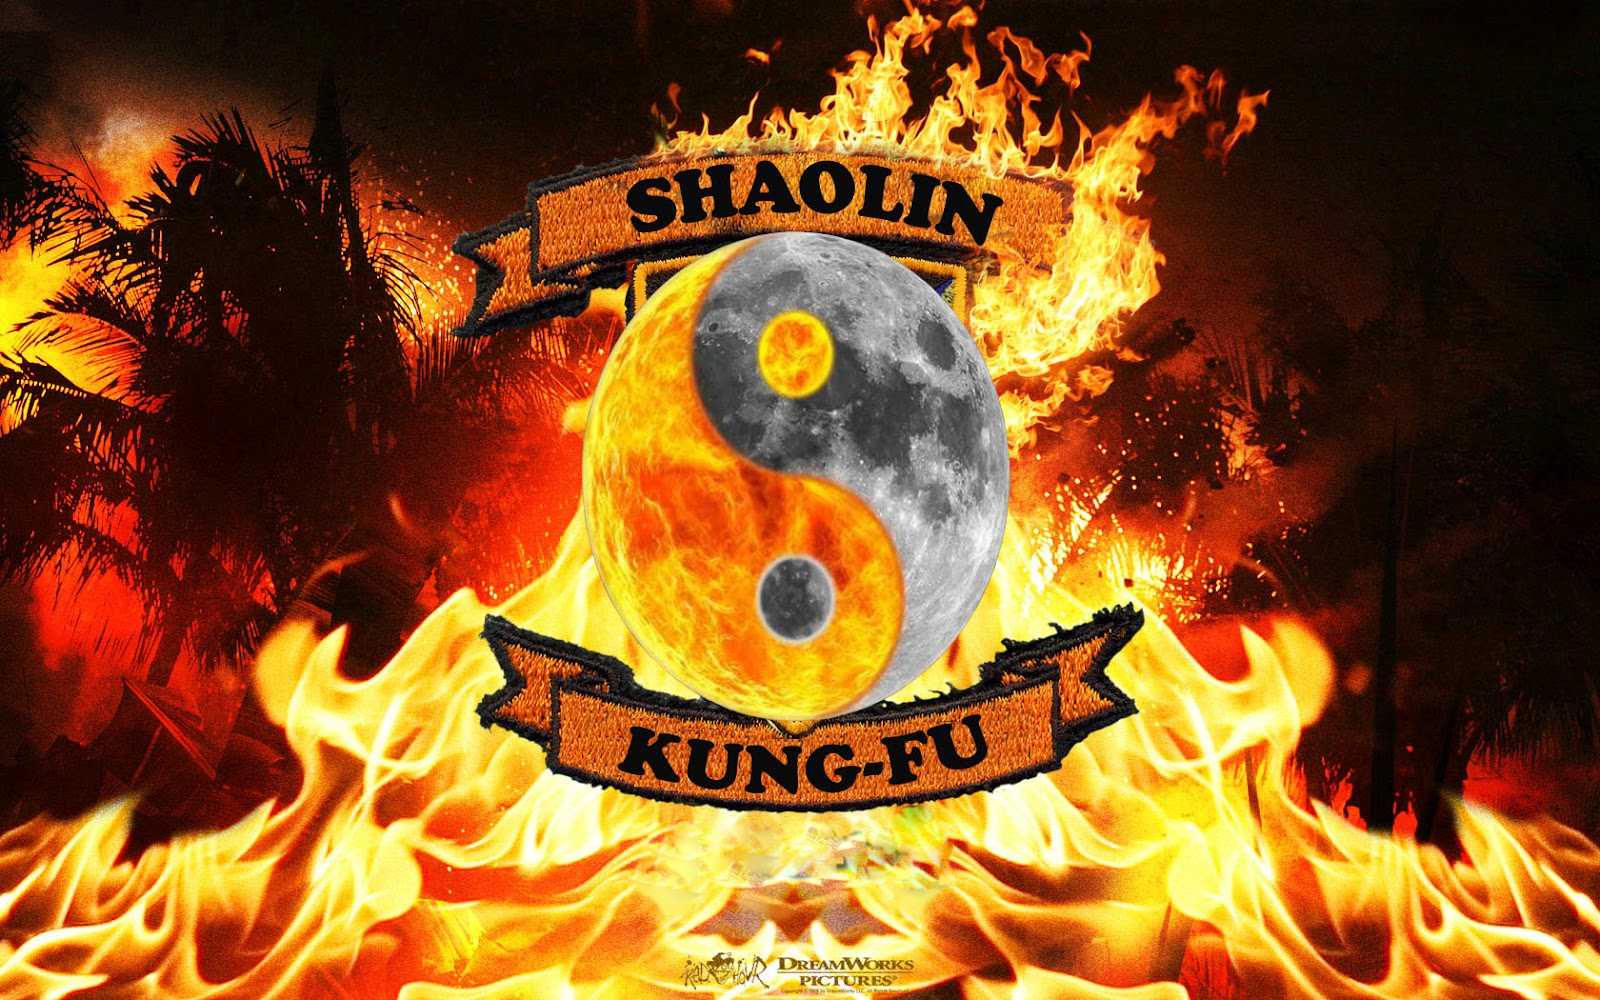 Kung Fu Wallpaper Widescreen High Quality Of iPhone Shaolin